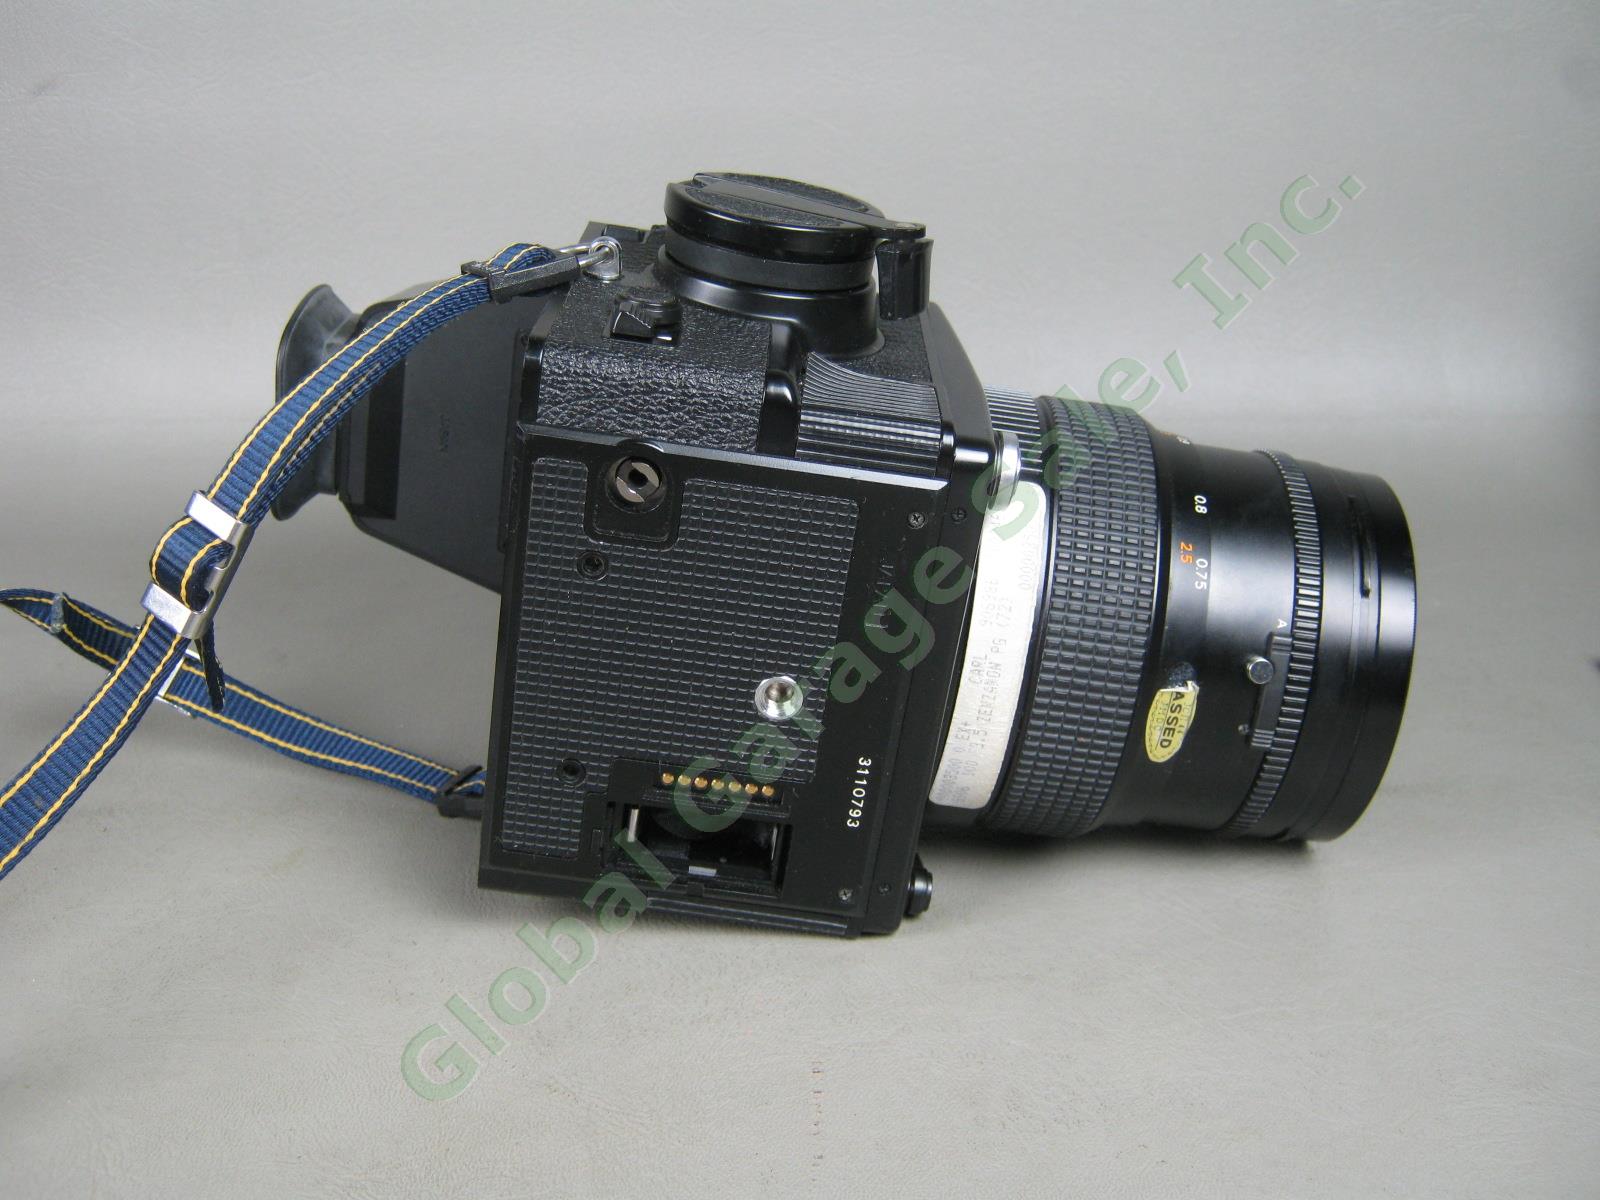 Bronica GS-1 6x7 Medium Format Camera Zenzanon-PG 100mm Lens Backs Grip Bundle 6